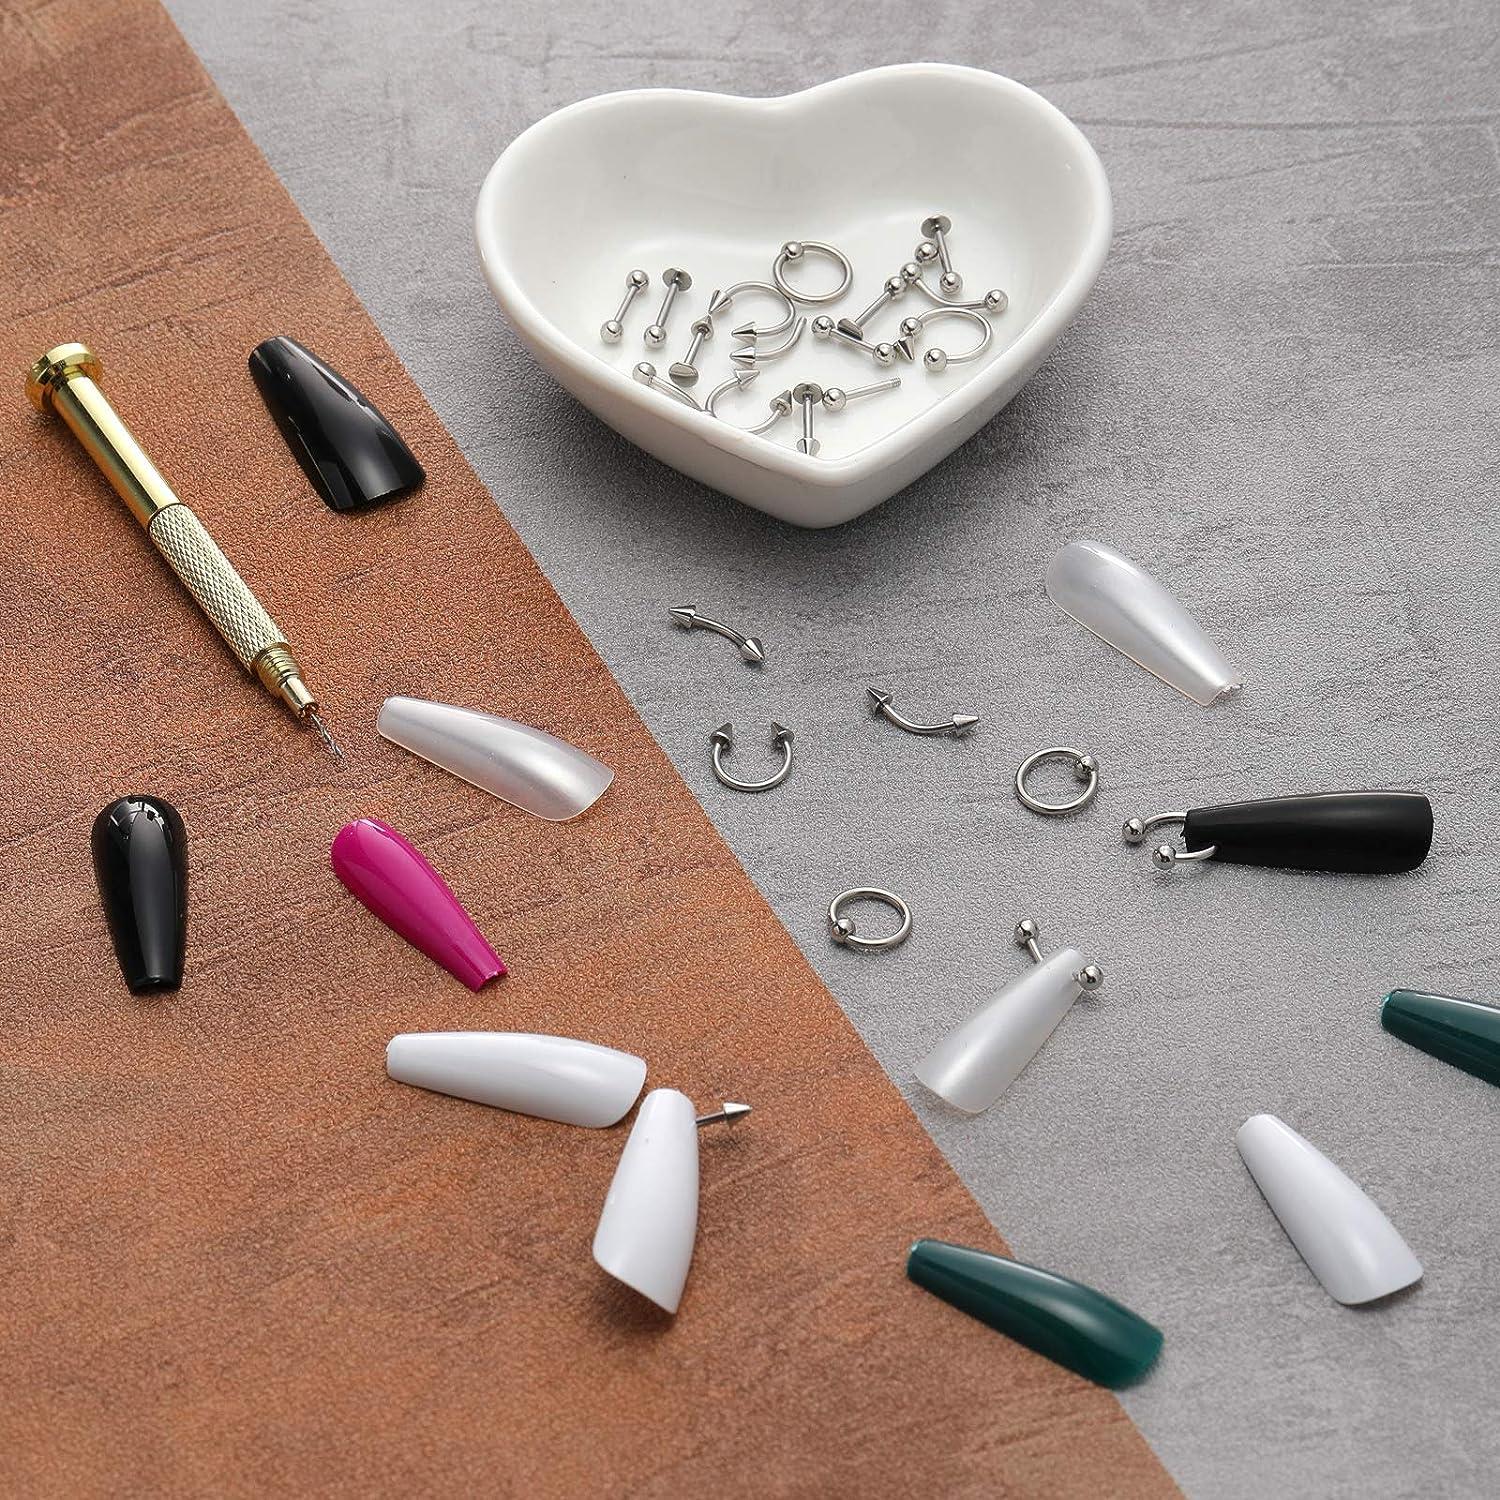 60Pcs Nail Art Charms Pendants with 1Pcs Nail Piercing Drill for Home DIY  Salon 